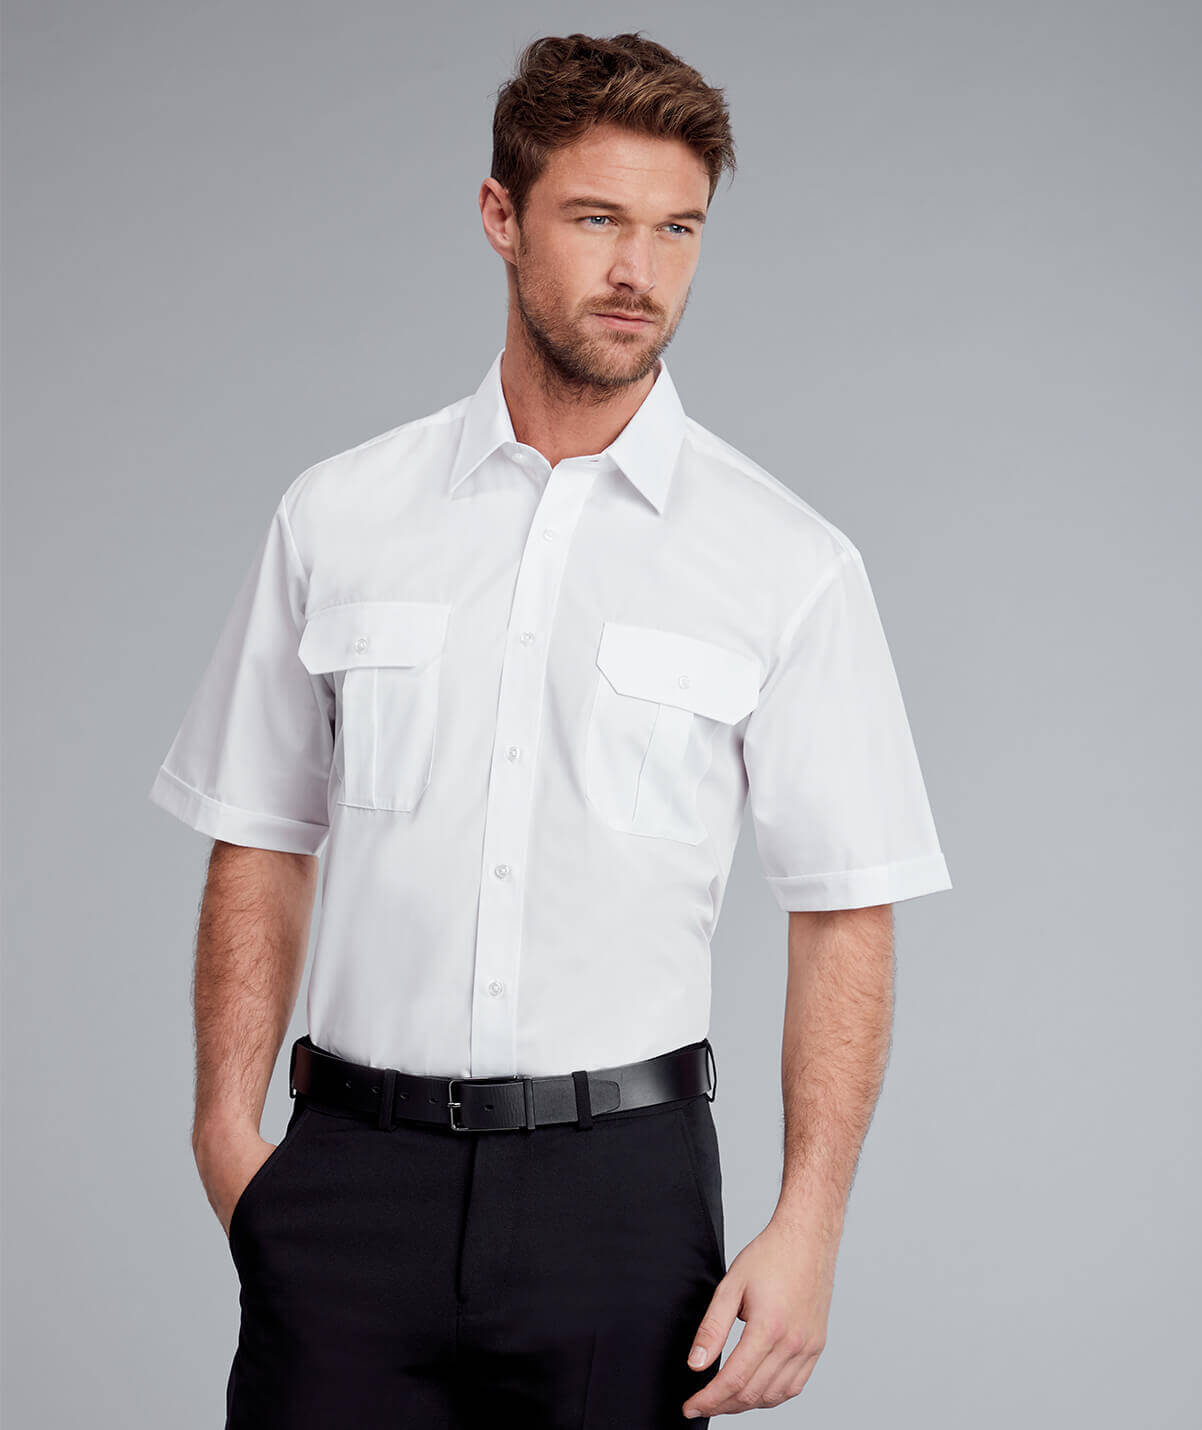 Williams Bush Long / Short Sleeve Shirt - Armstrong Aviation Clothing